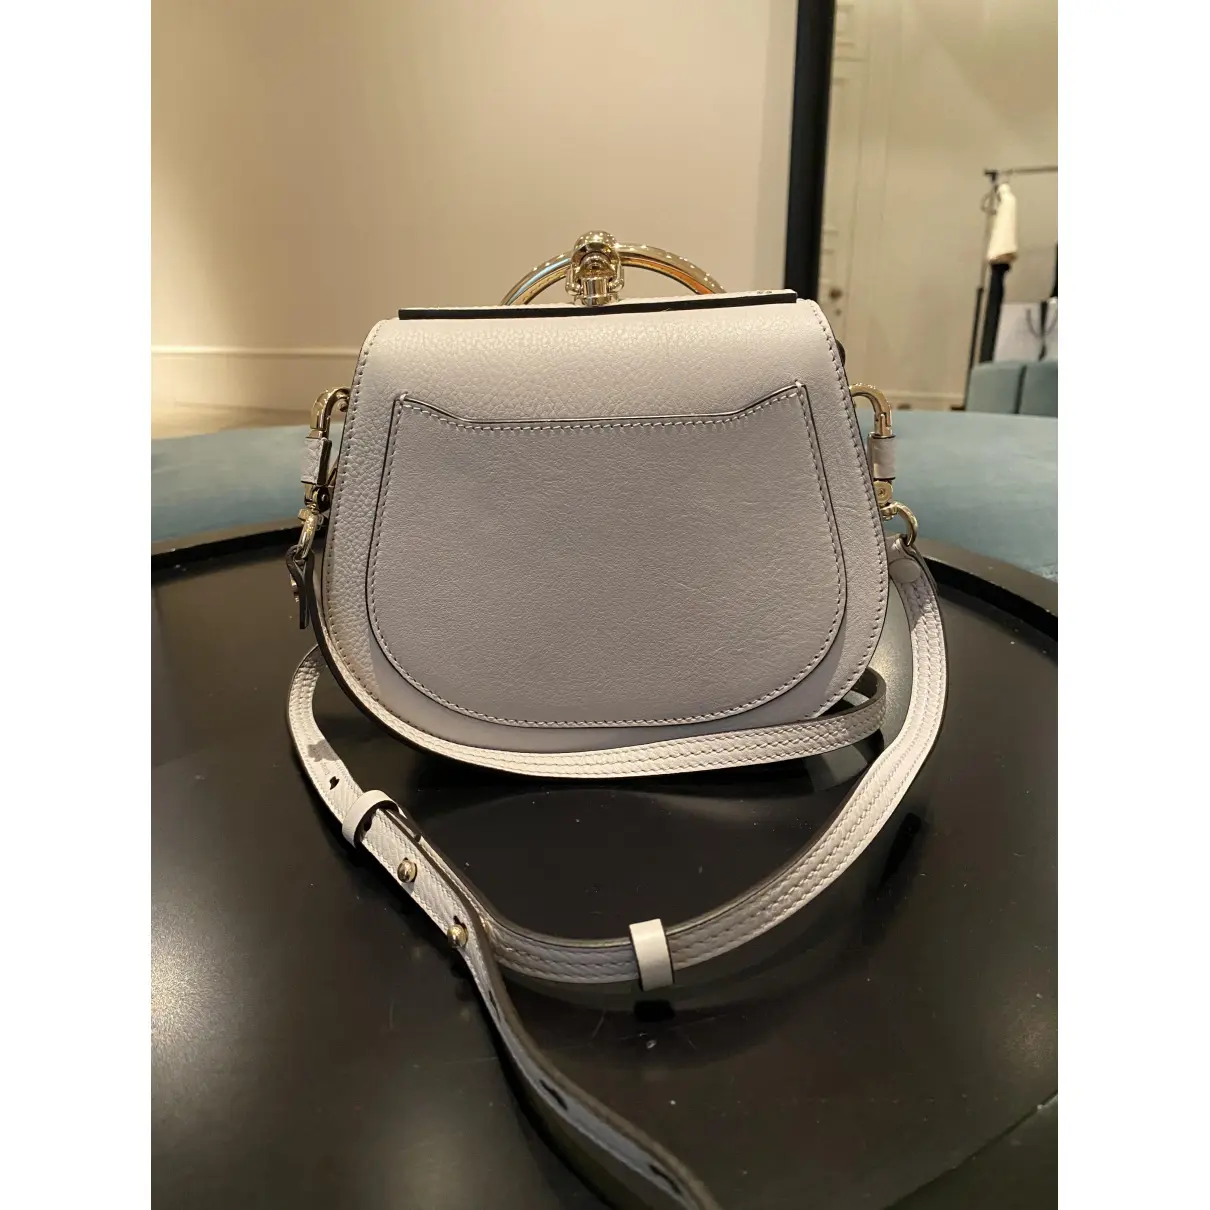 Buy Chloé Tess handbag online